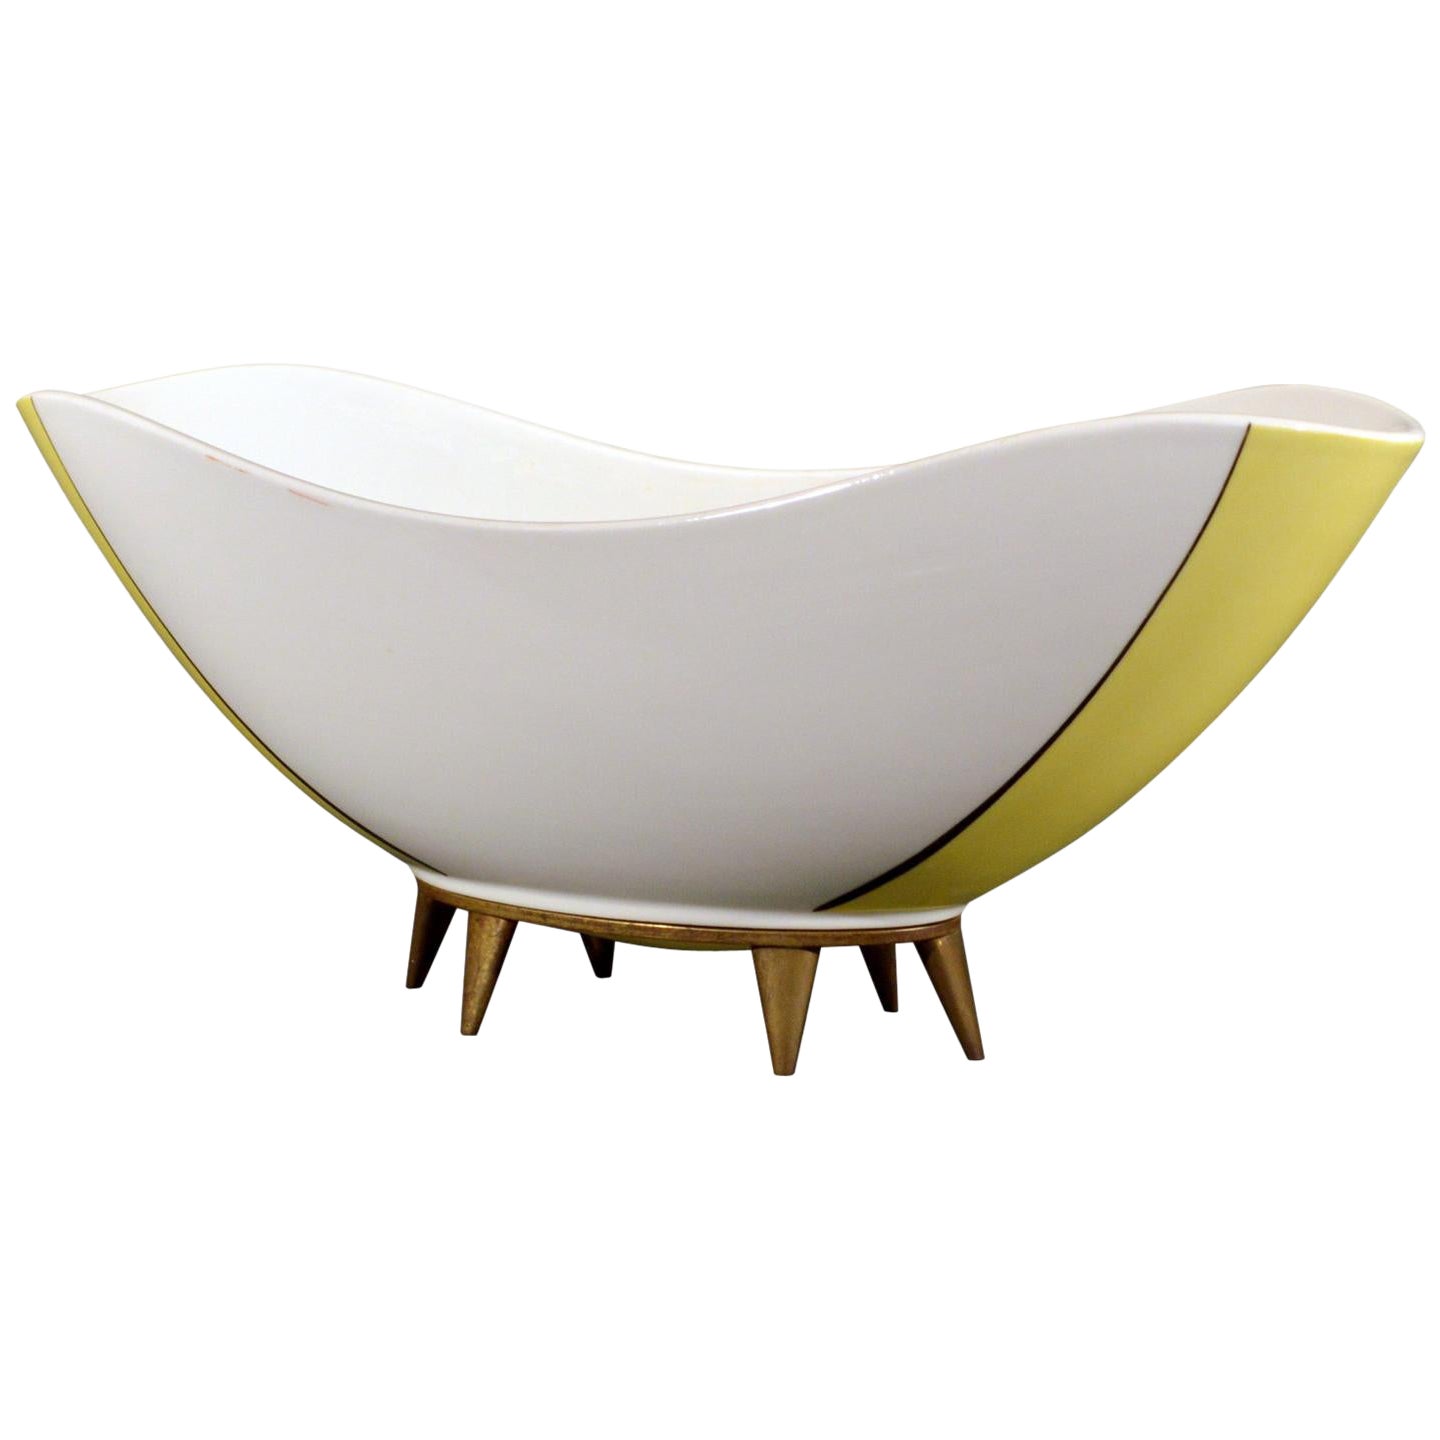 Siegmund Schütz Modernist Ceramic Bowl for KPM Berlin For Sale